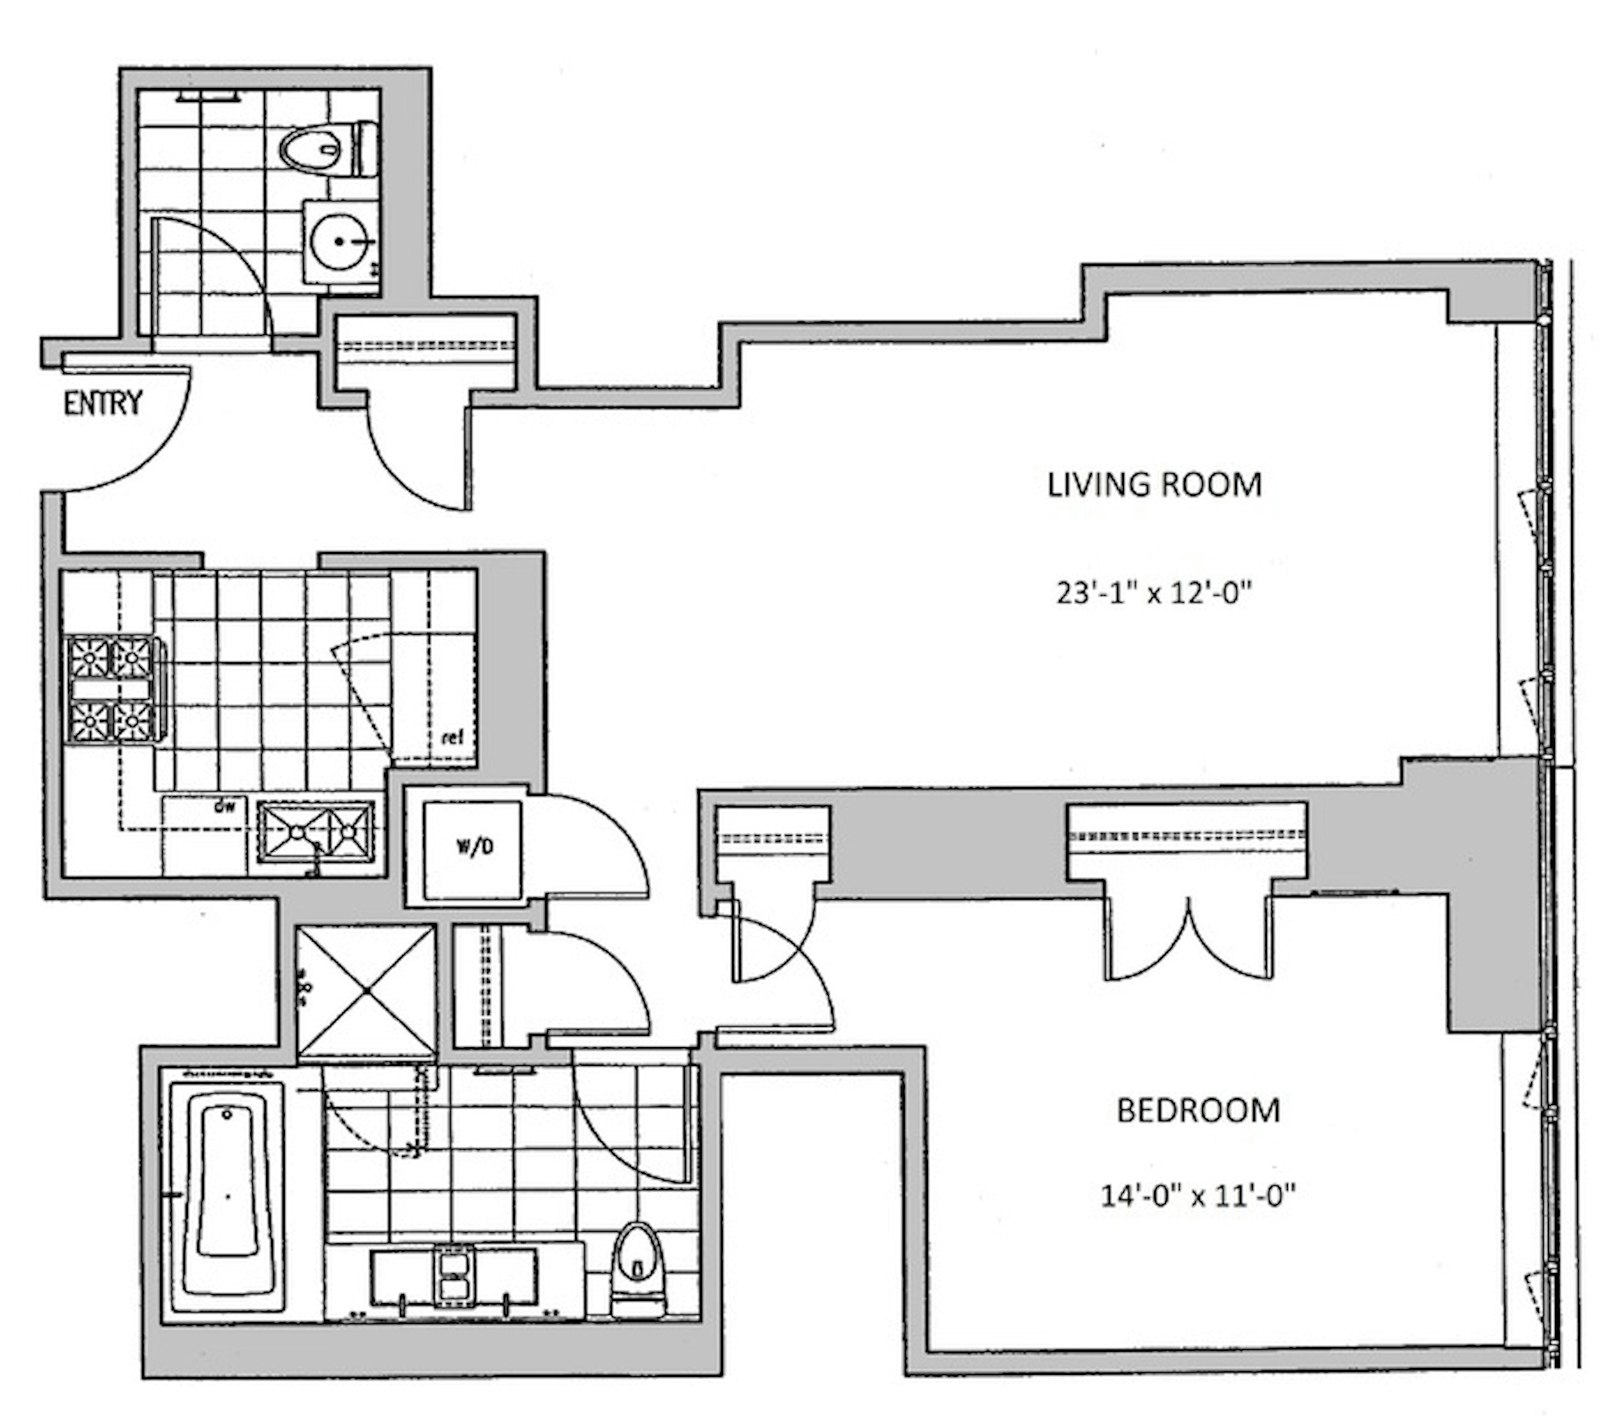 Floorplan for 250 East 53rd Street, 706